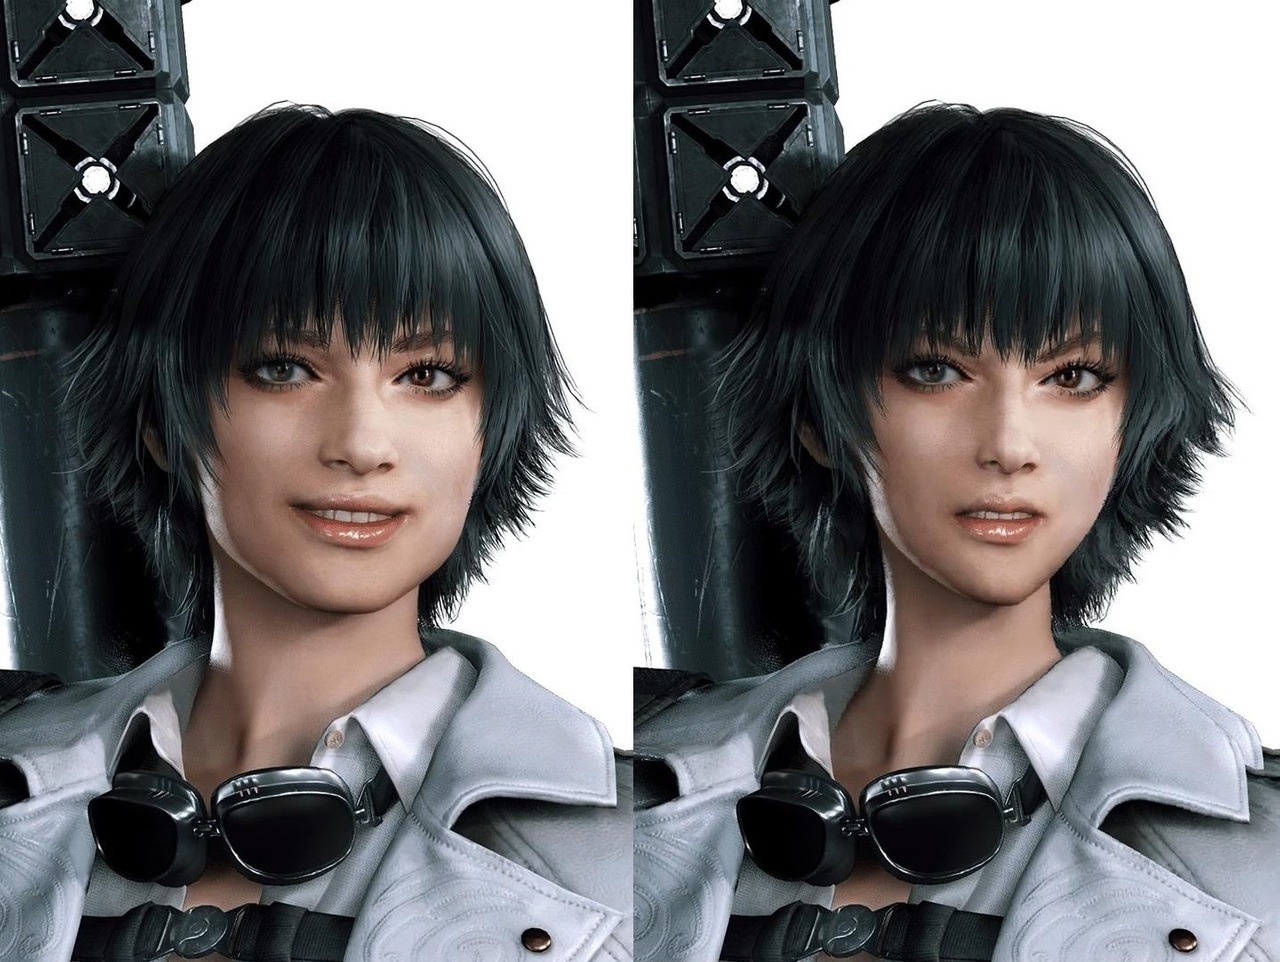 Devil May Cry 5 character models look really nice! : r/gaming